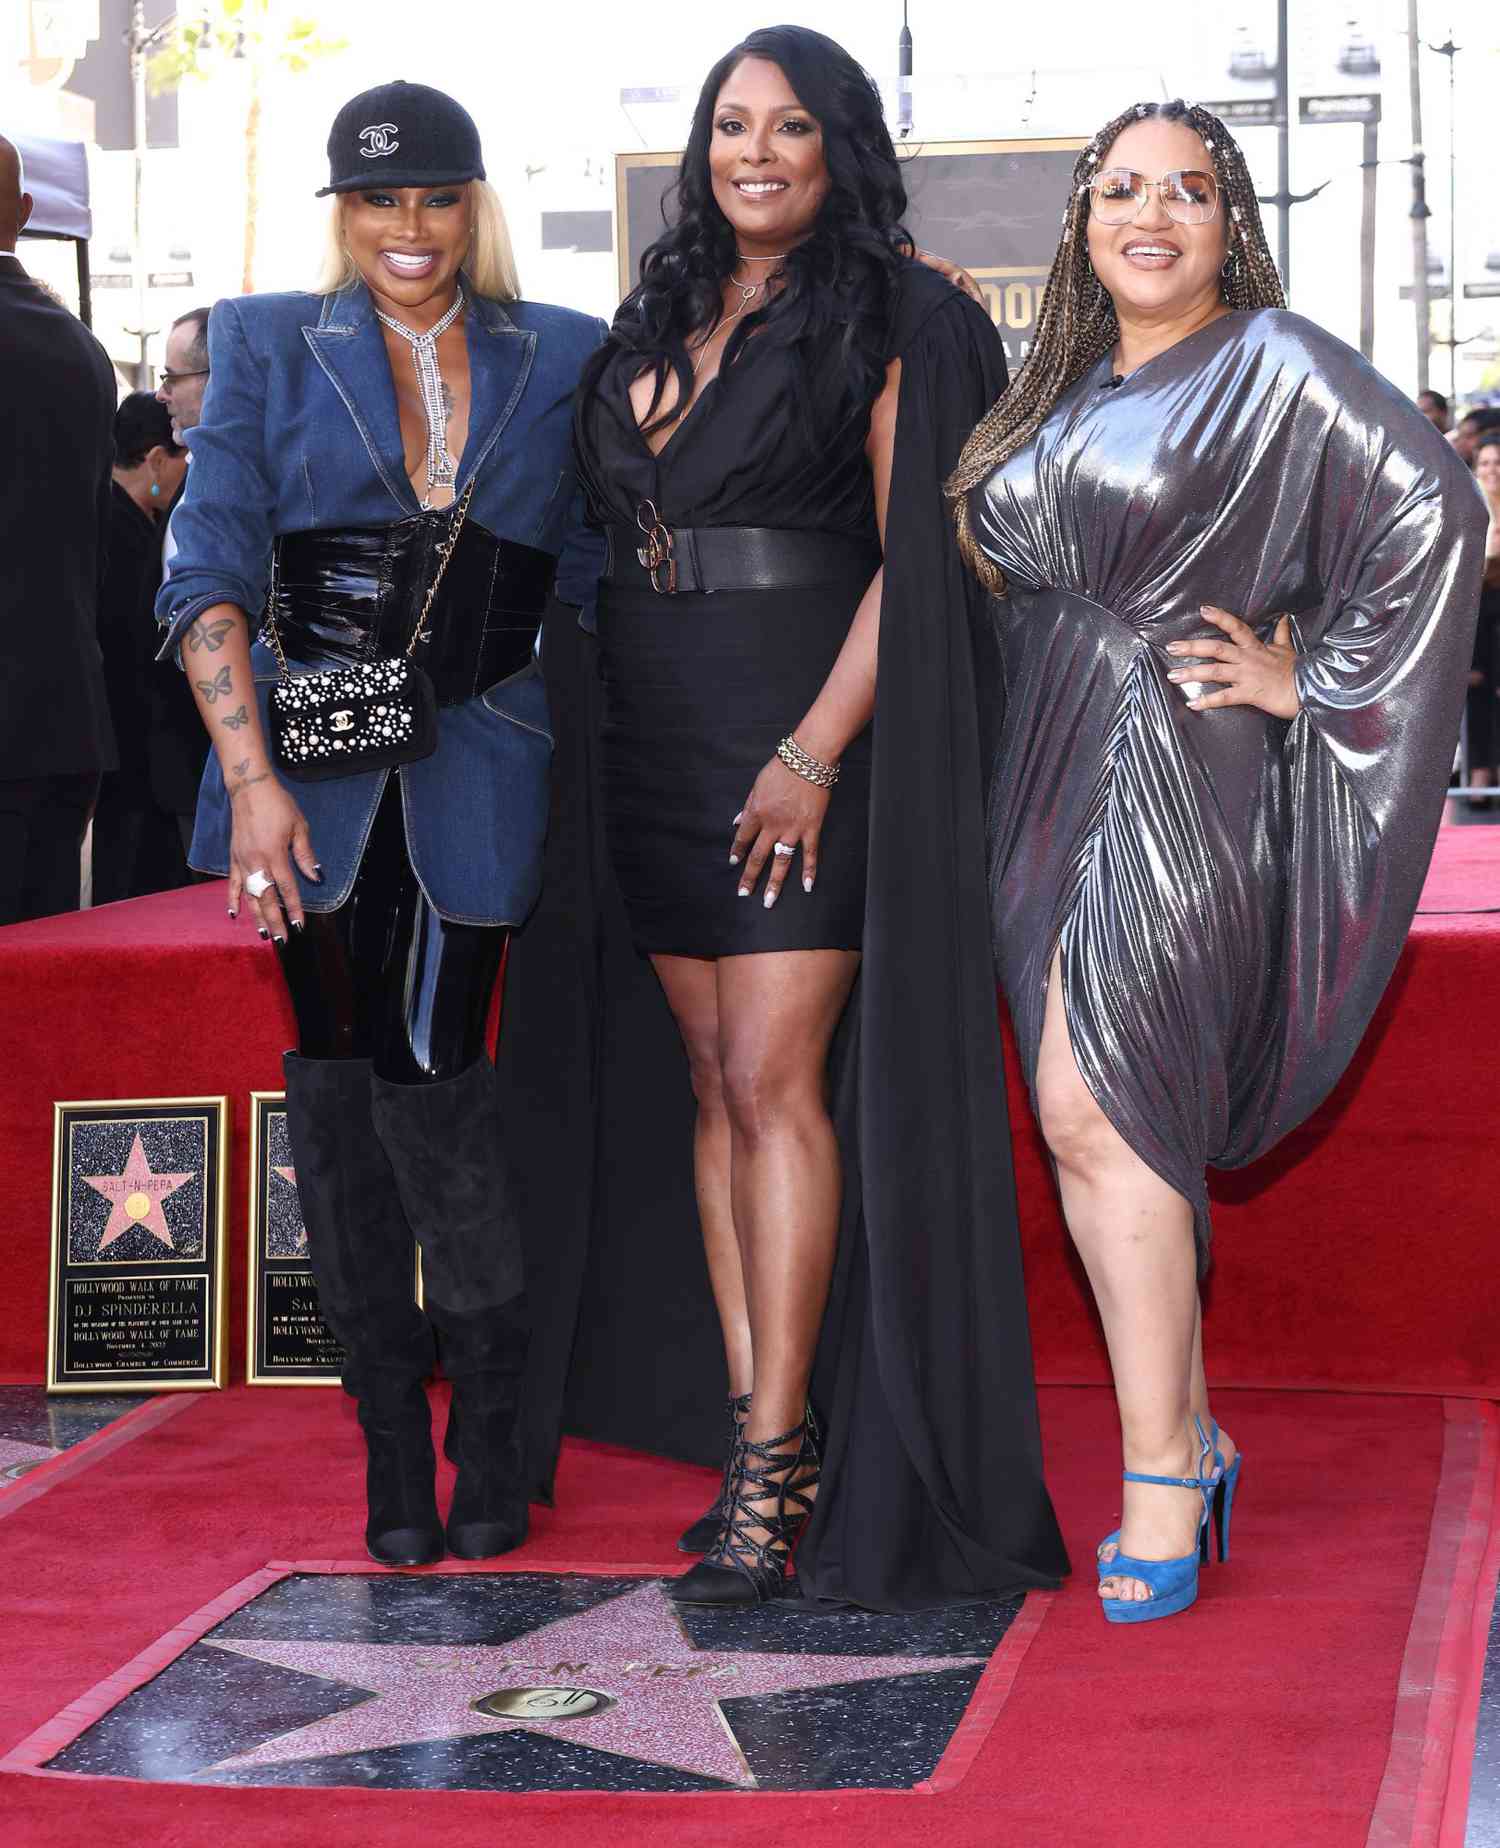 Salt-N-Pepa Reunite for Hollywood Walk of Fame Ceremony